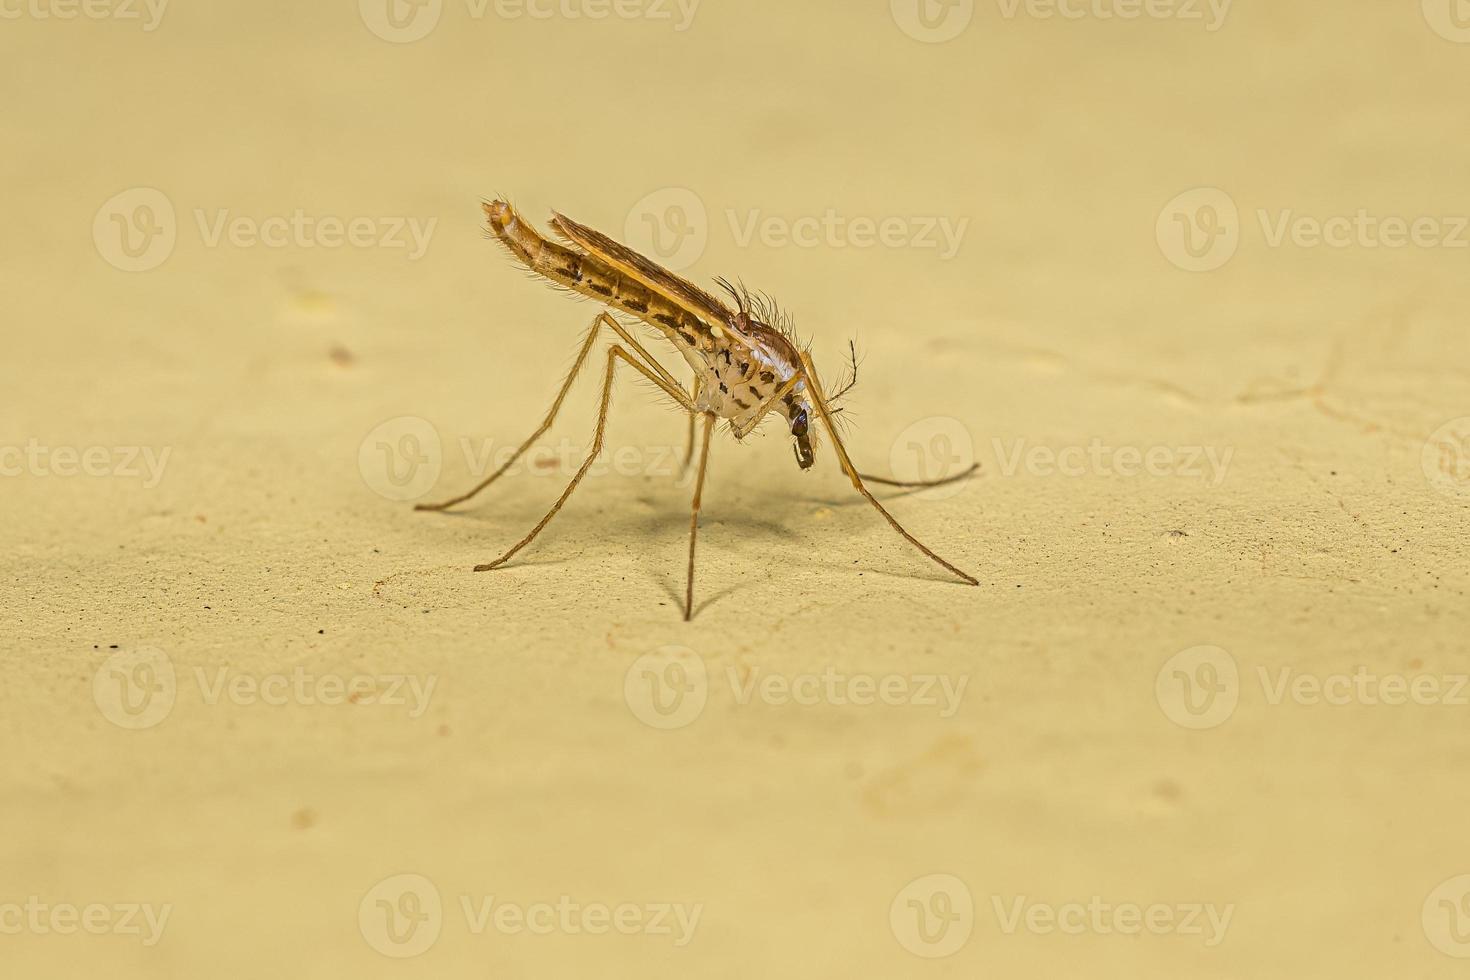 adulto femmina fantasma moscerino insetto foto